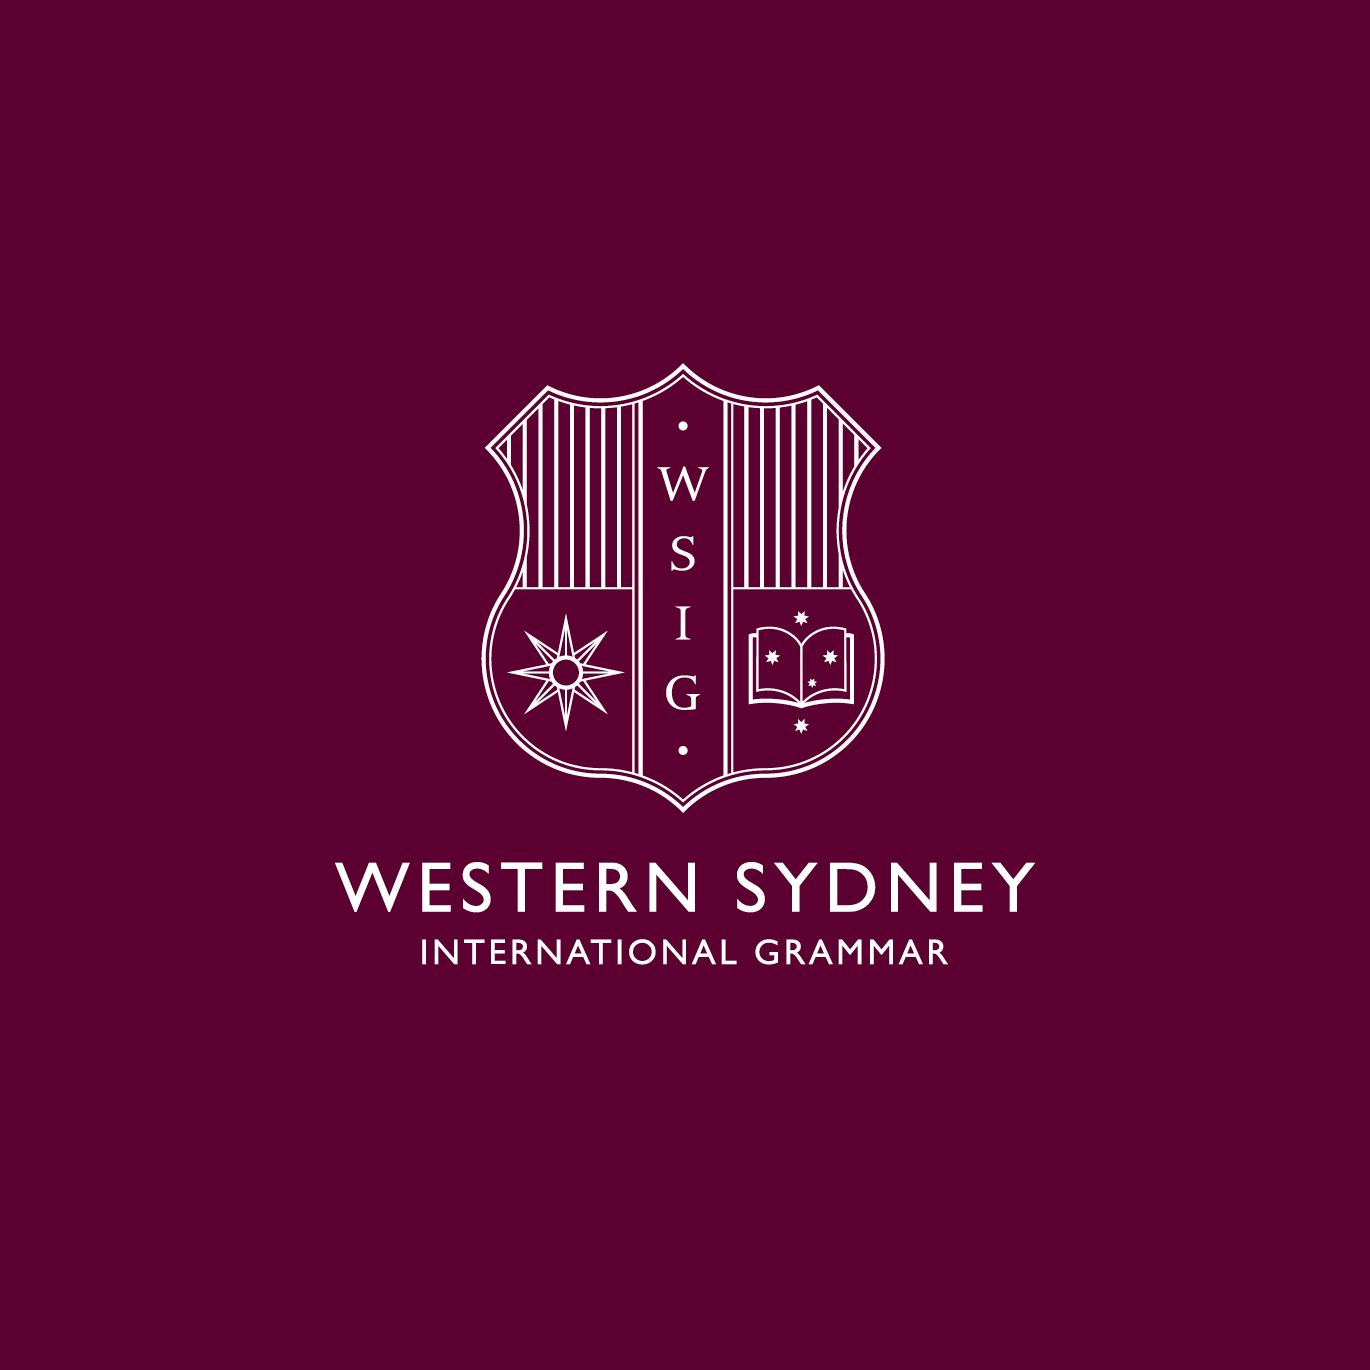 Branding, brand identity, logo design, web design and photography. Sydney, Surry Hills